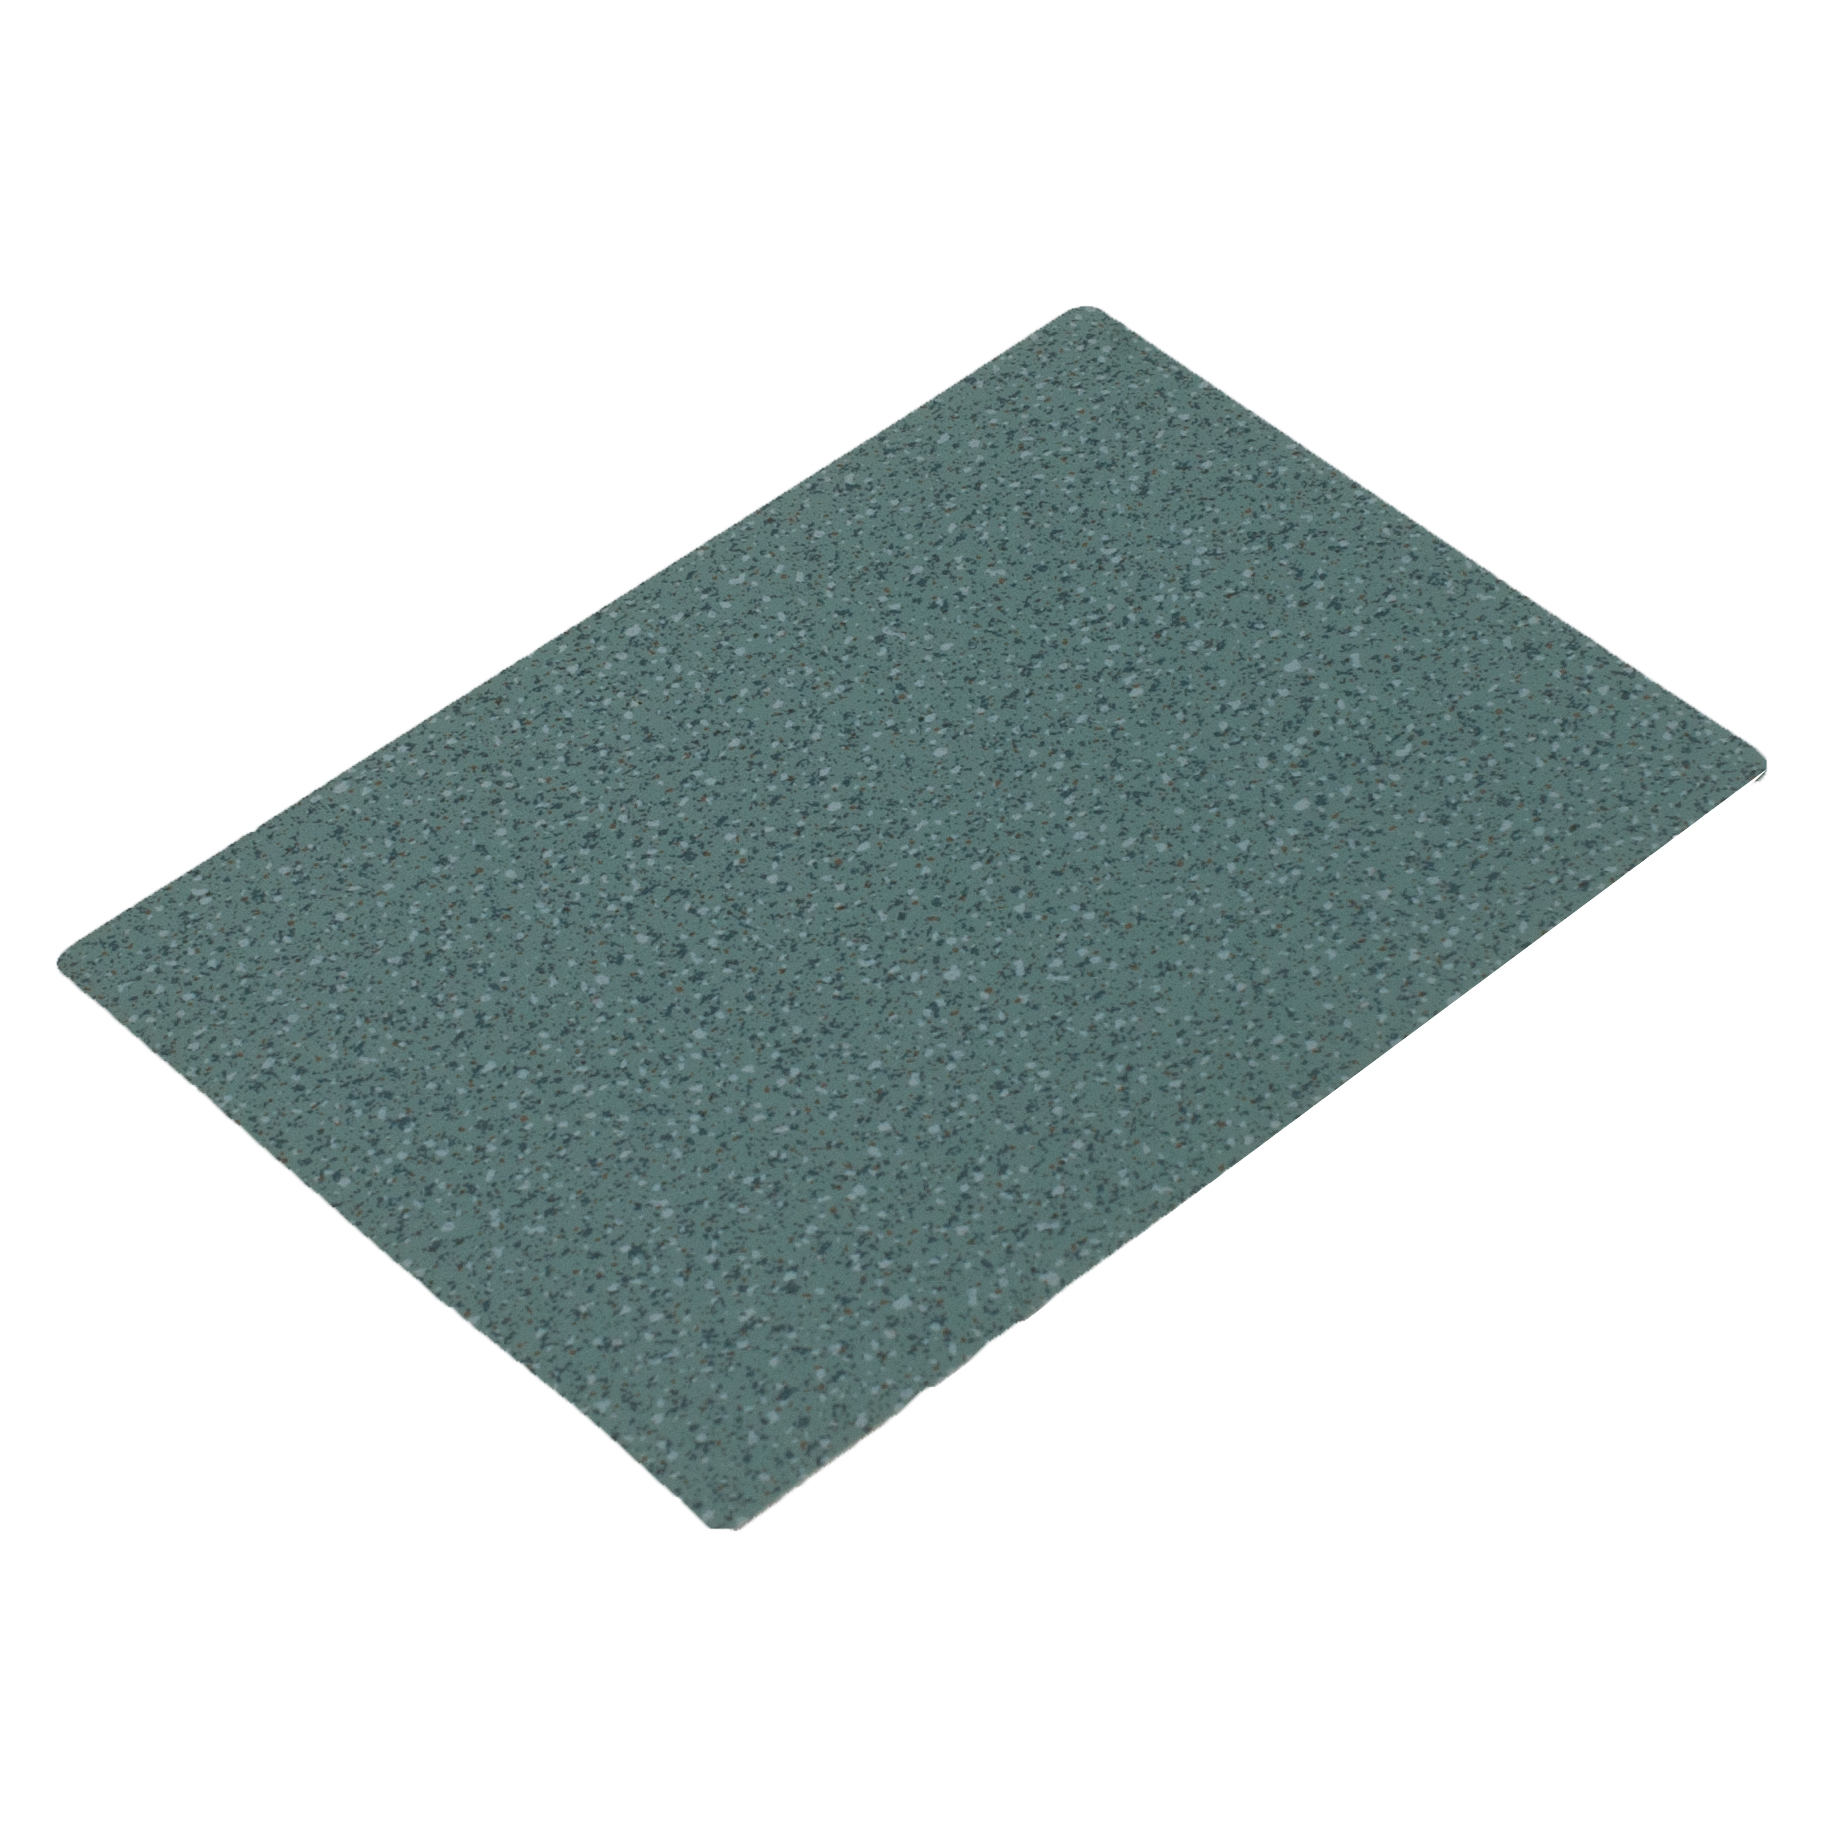 Black Ce Certified PVC Flooring For Basement